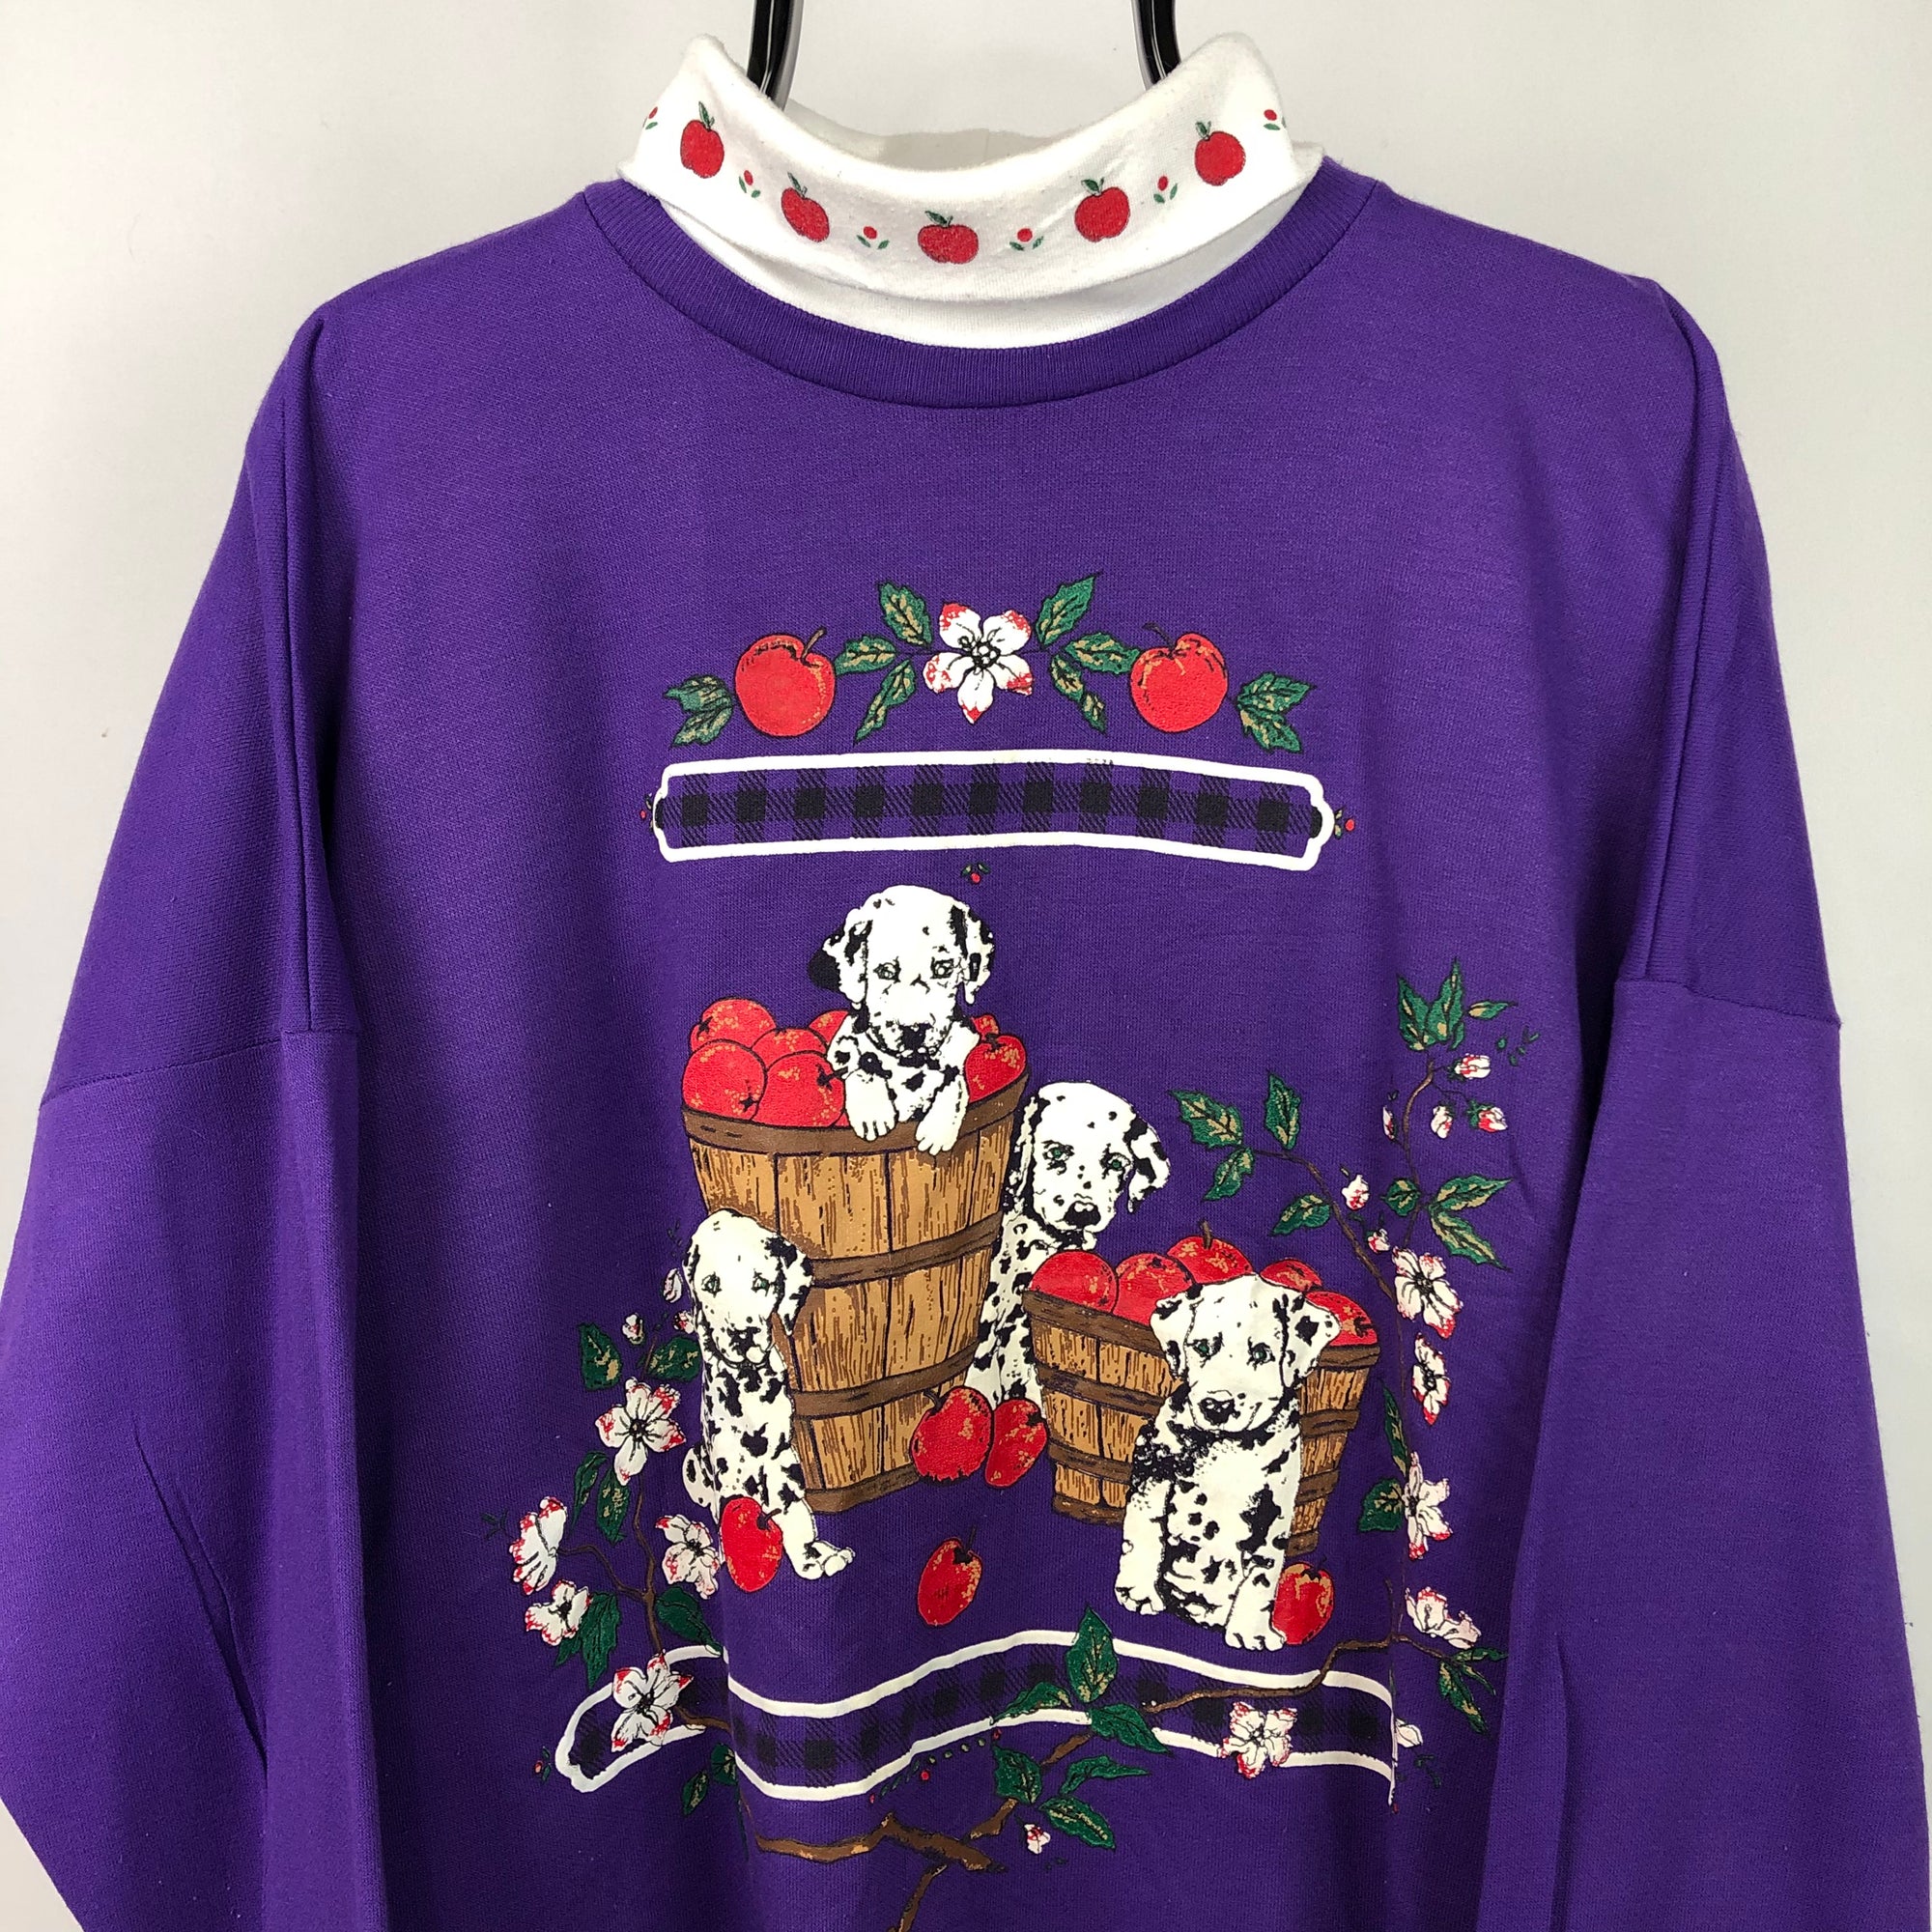 Vintage Dalmatians Sweatshirt in Purple - Men's XL/Women's XXL